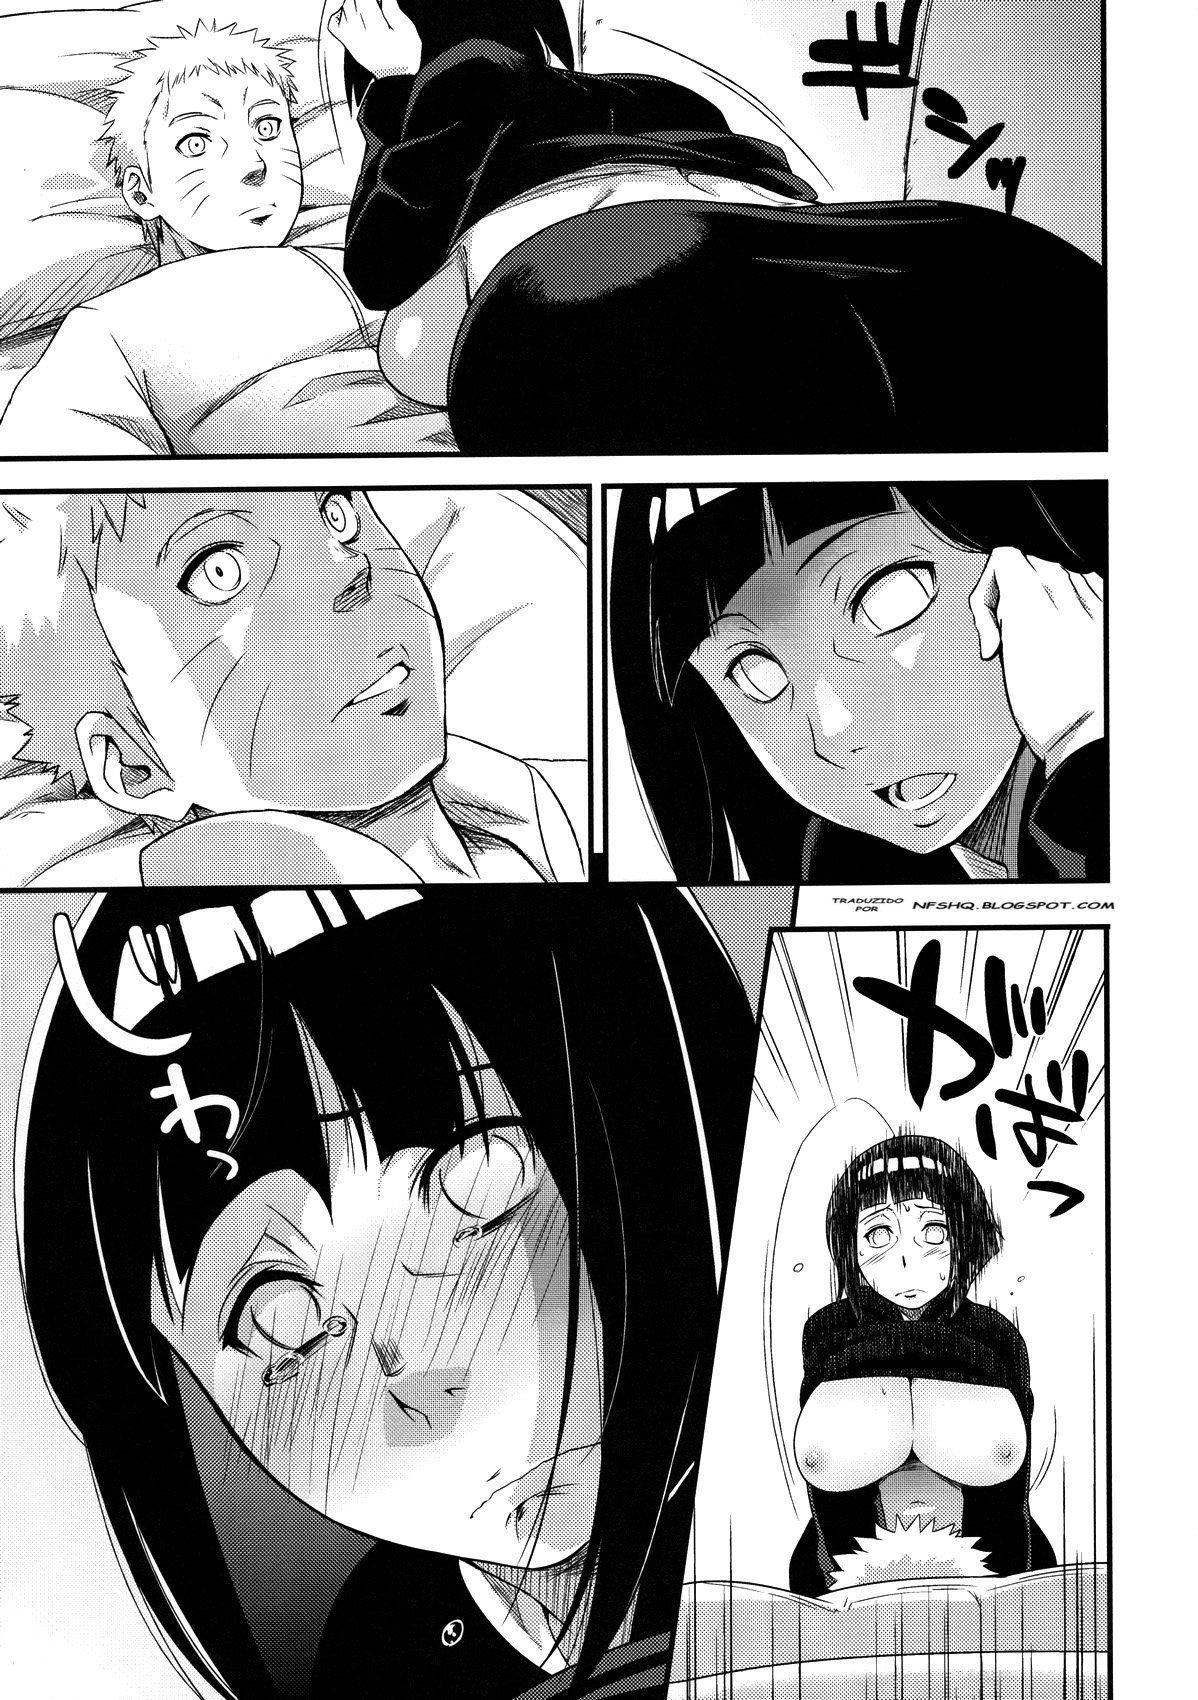 Hinata sendo amante de Naruto